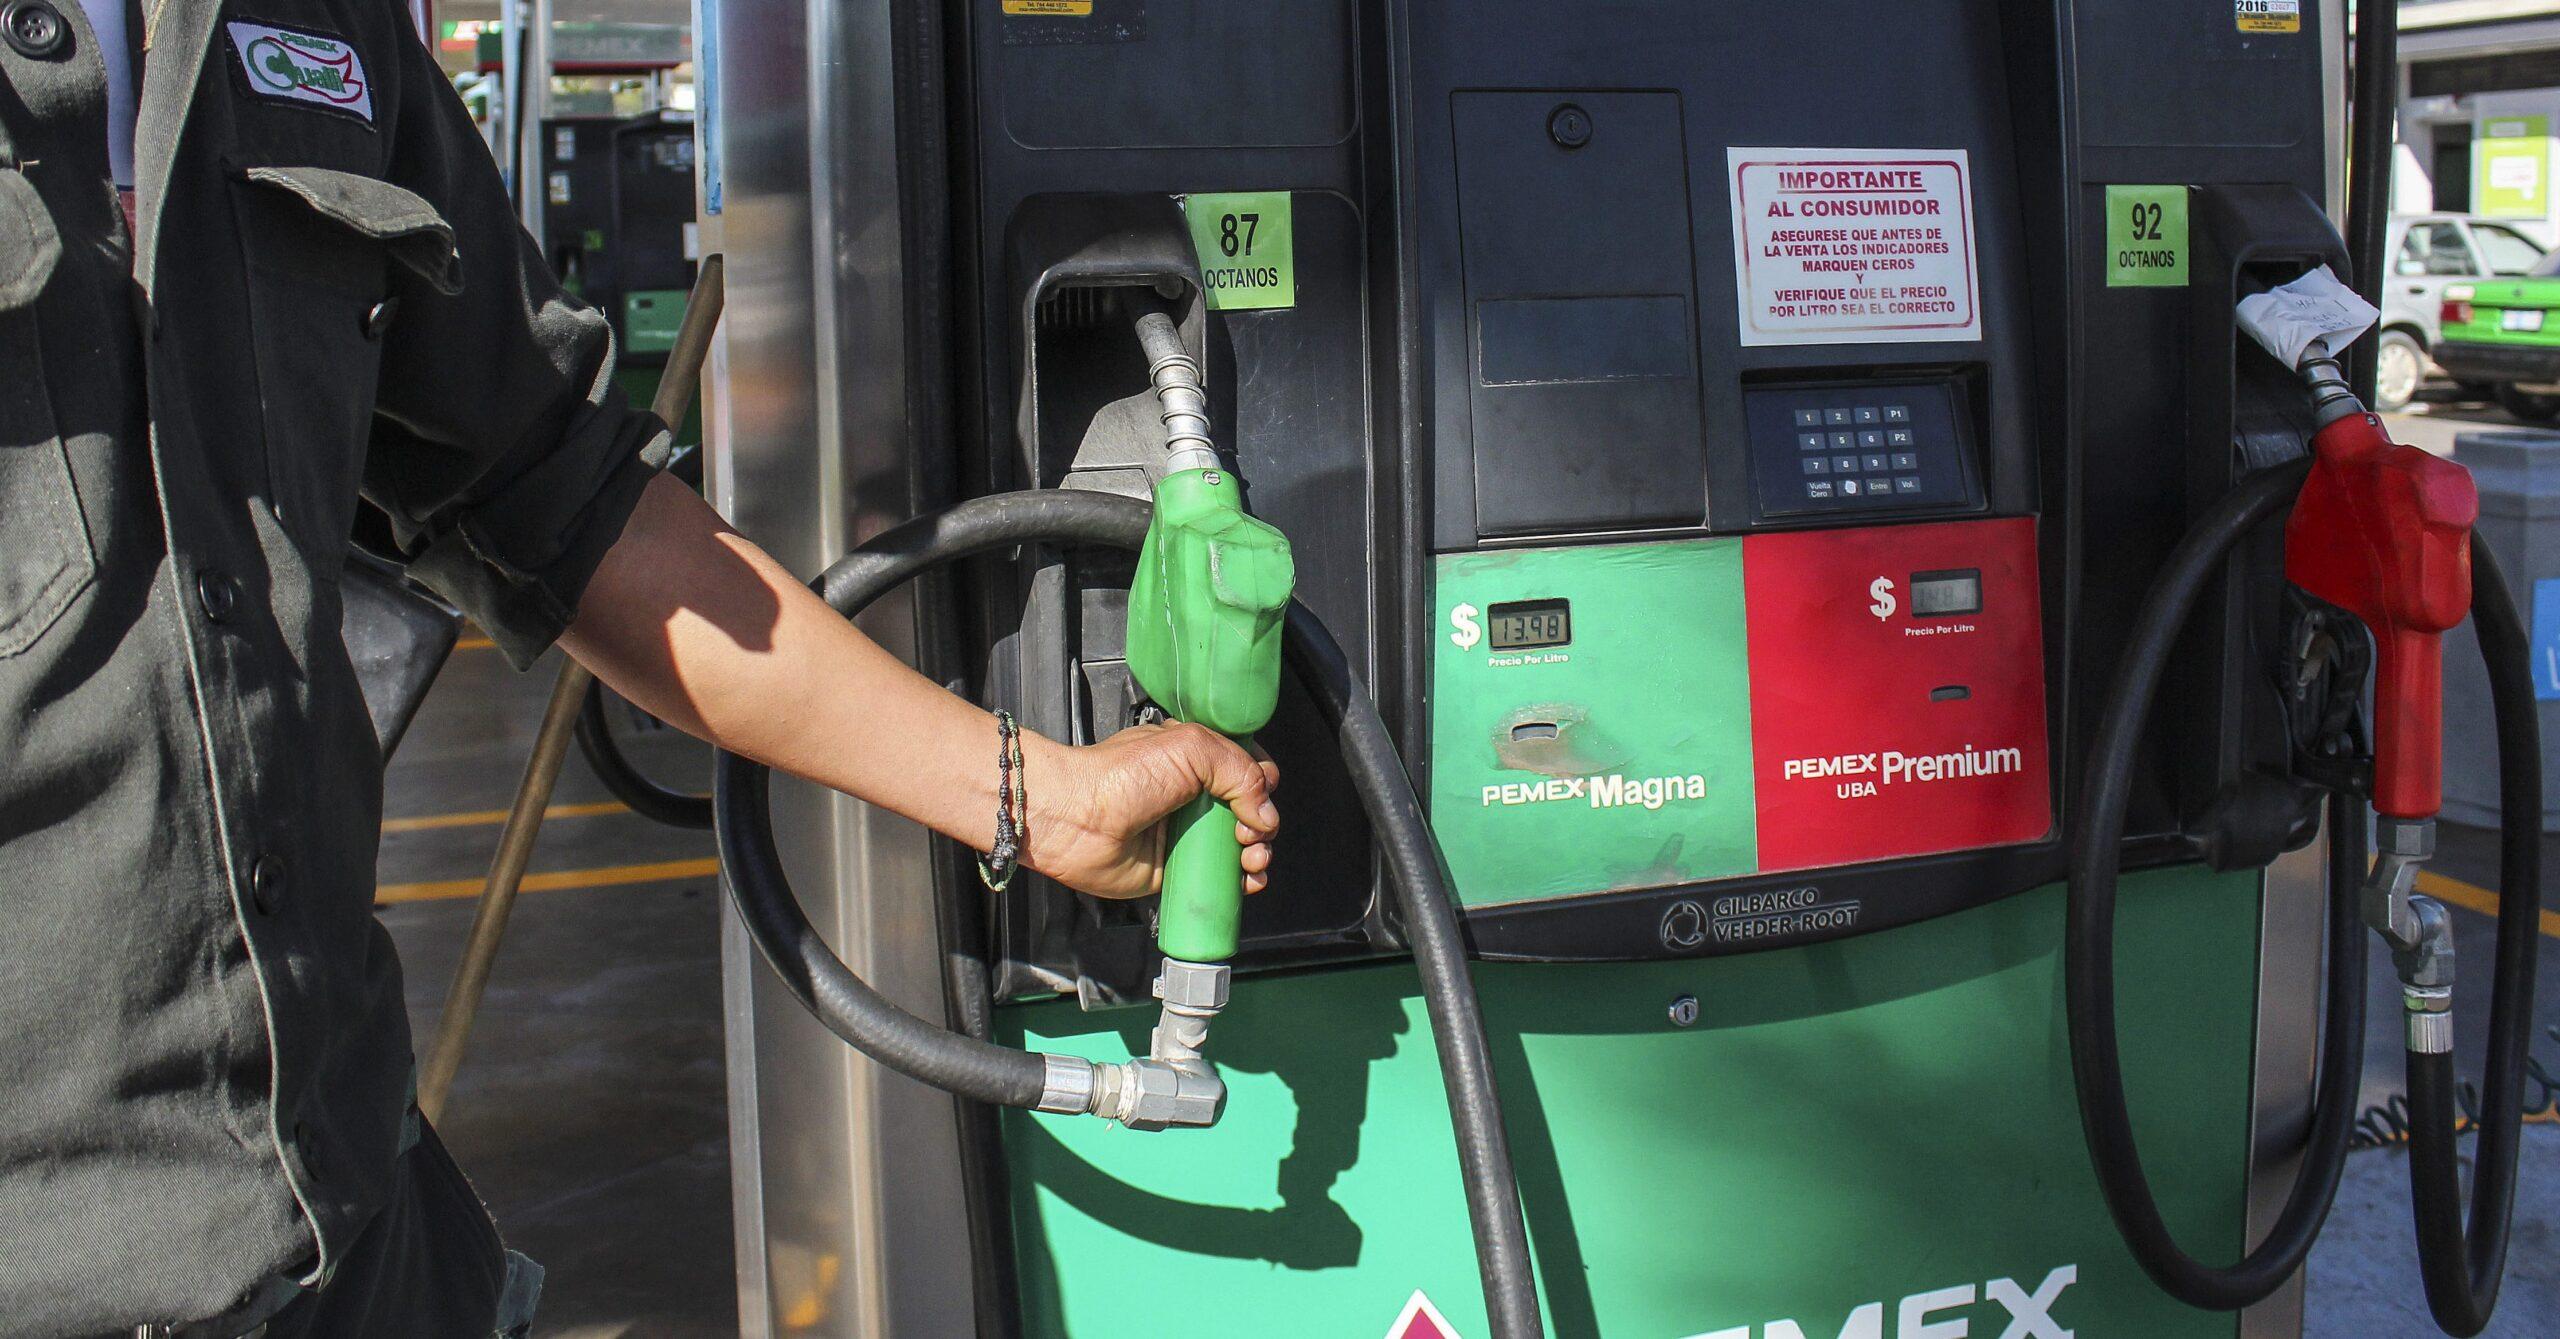 2017 inicia con un mega gasolinazo en México